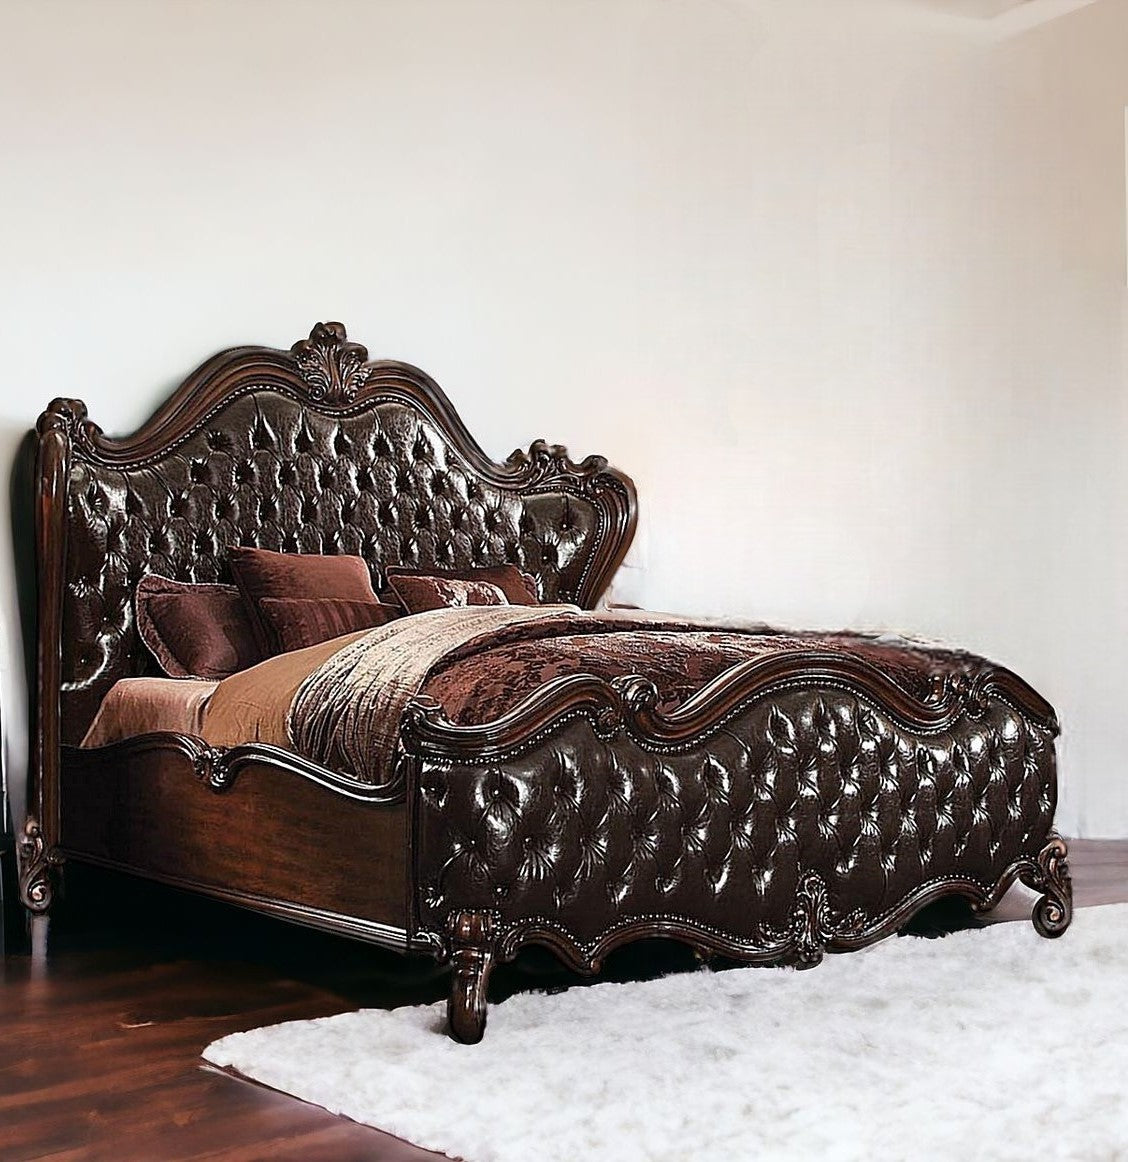 88" X 101" X 76" 2-Tone Dark Brown Pu Cherry Oak Wood Poly Resin Upholstery California King Bed